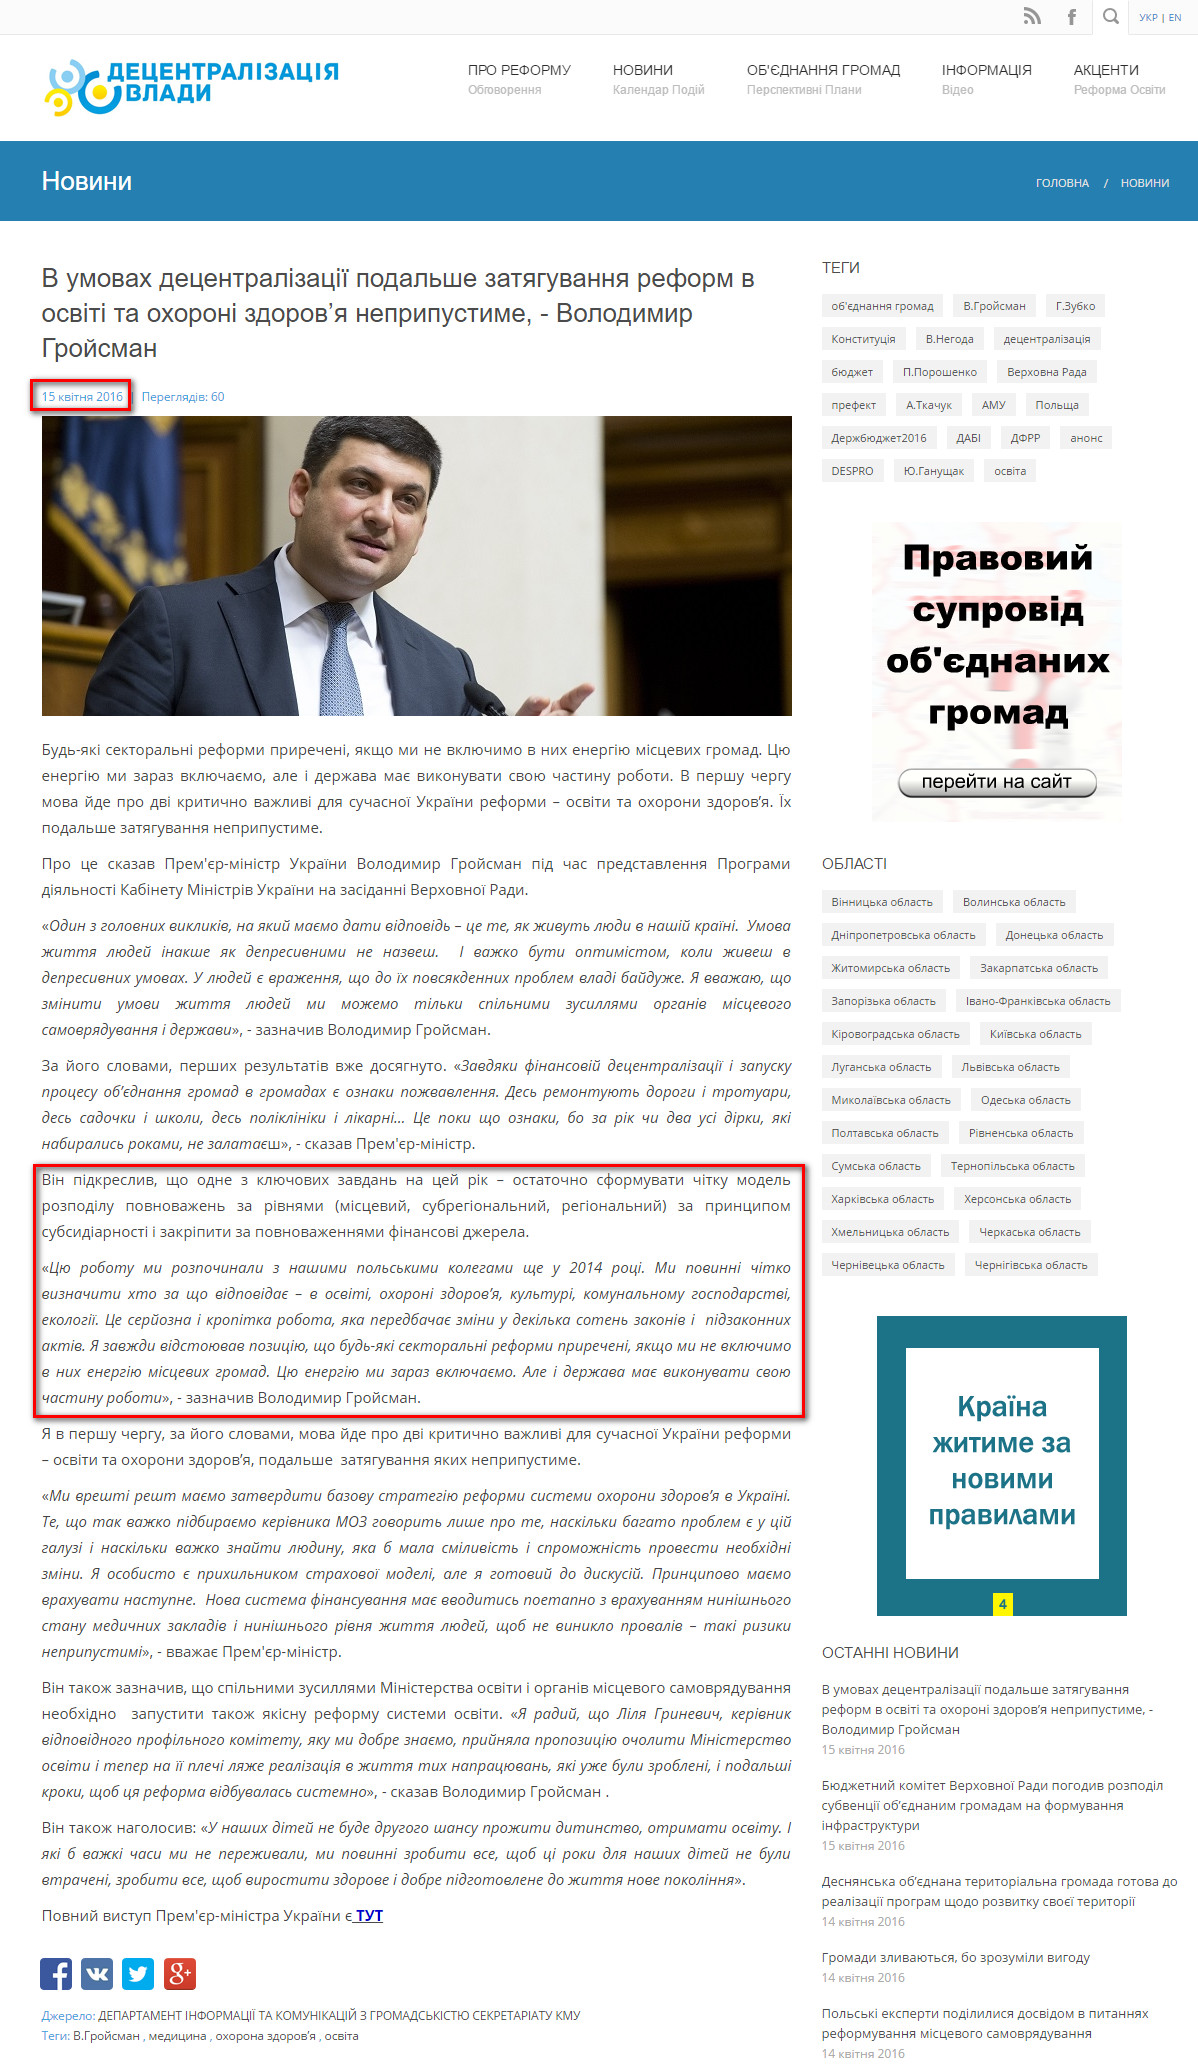 http://decentralization.gov.ua/news/item/id/2134